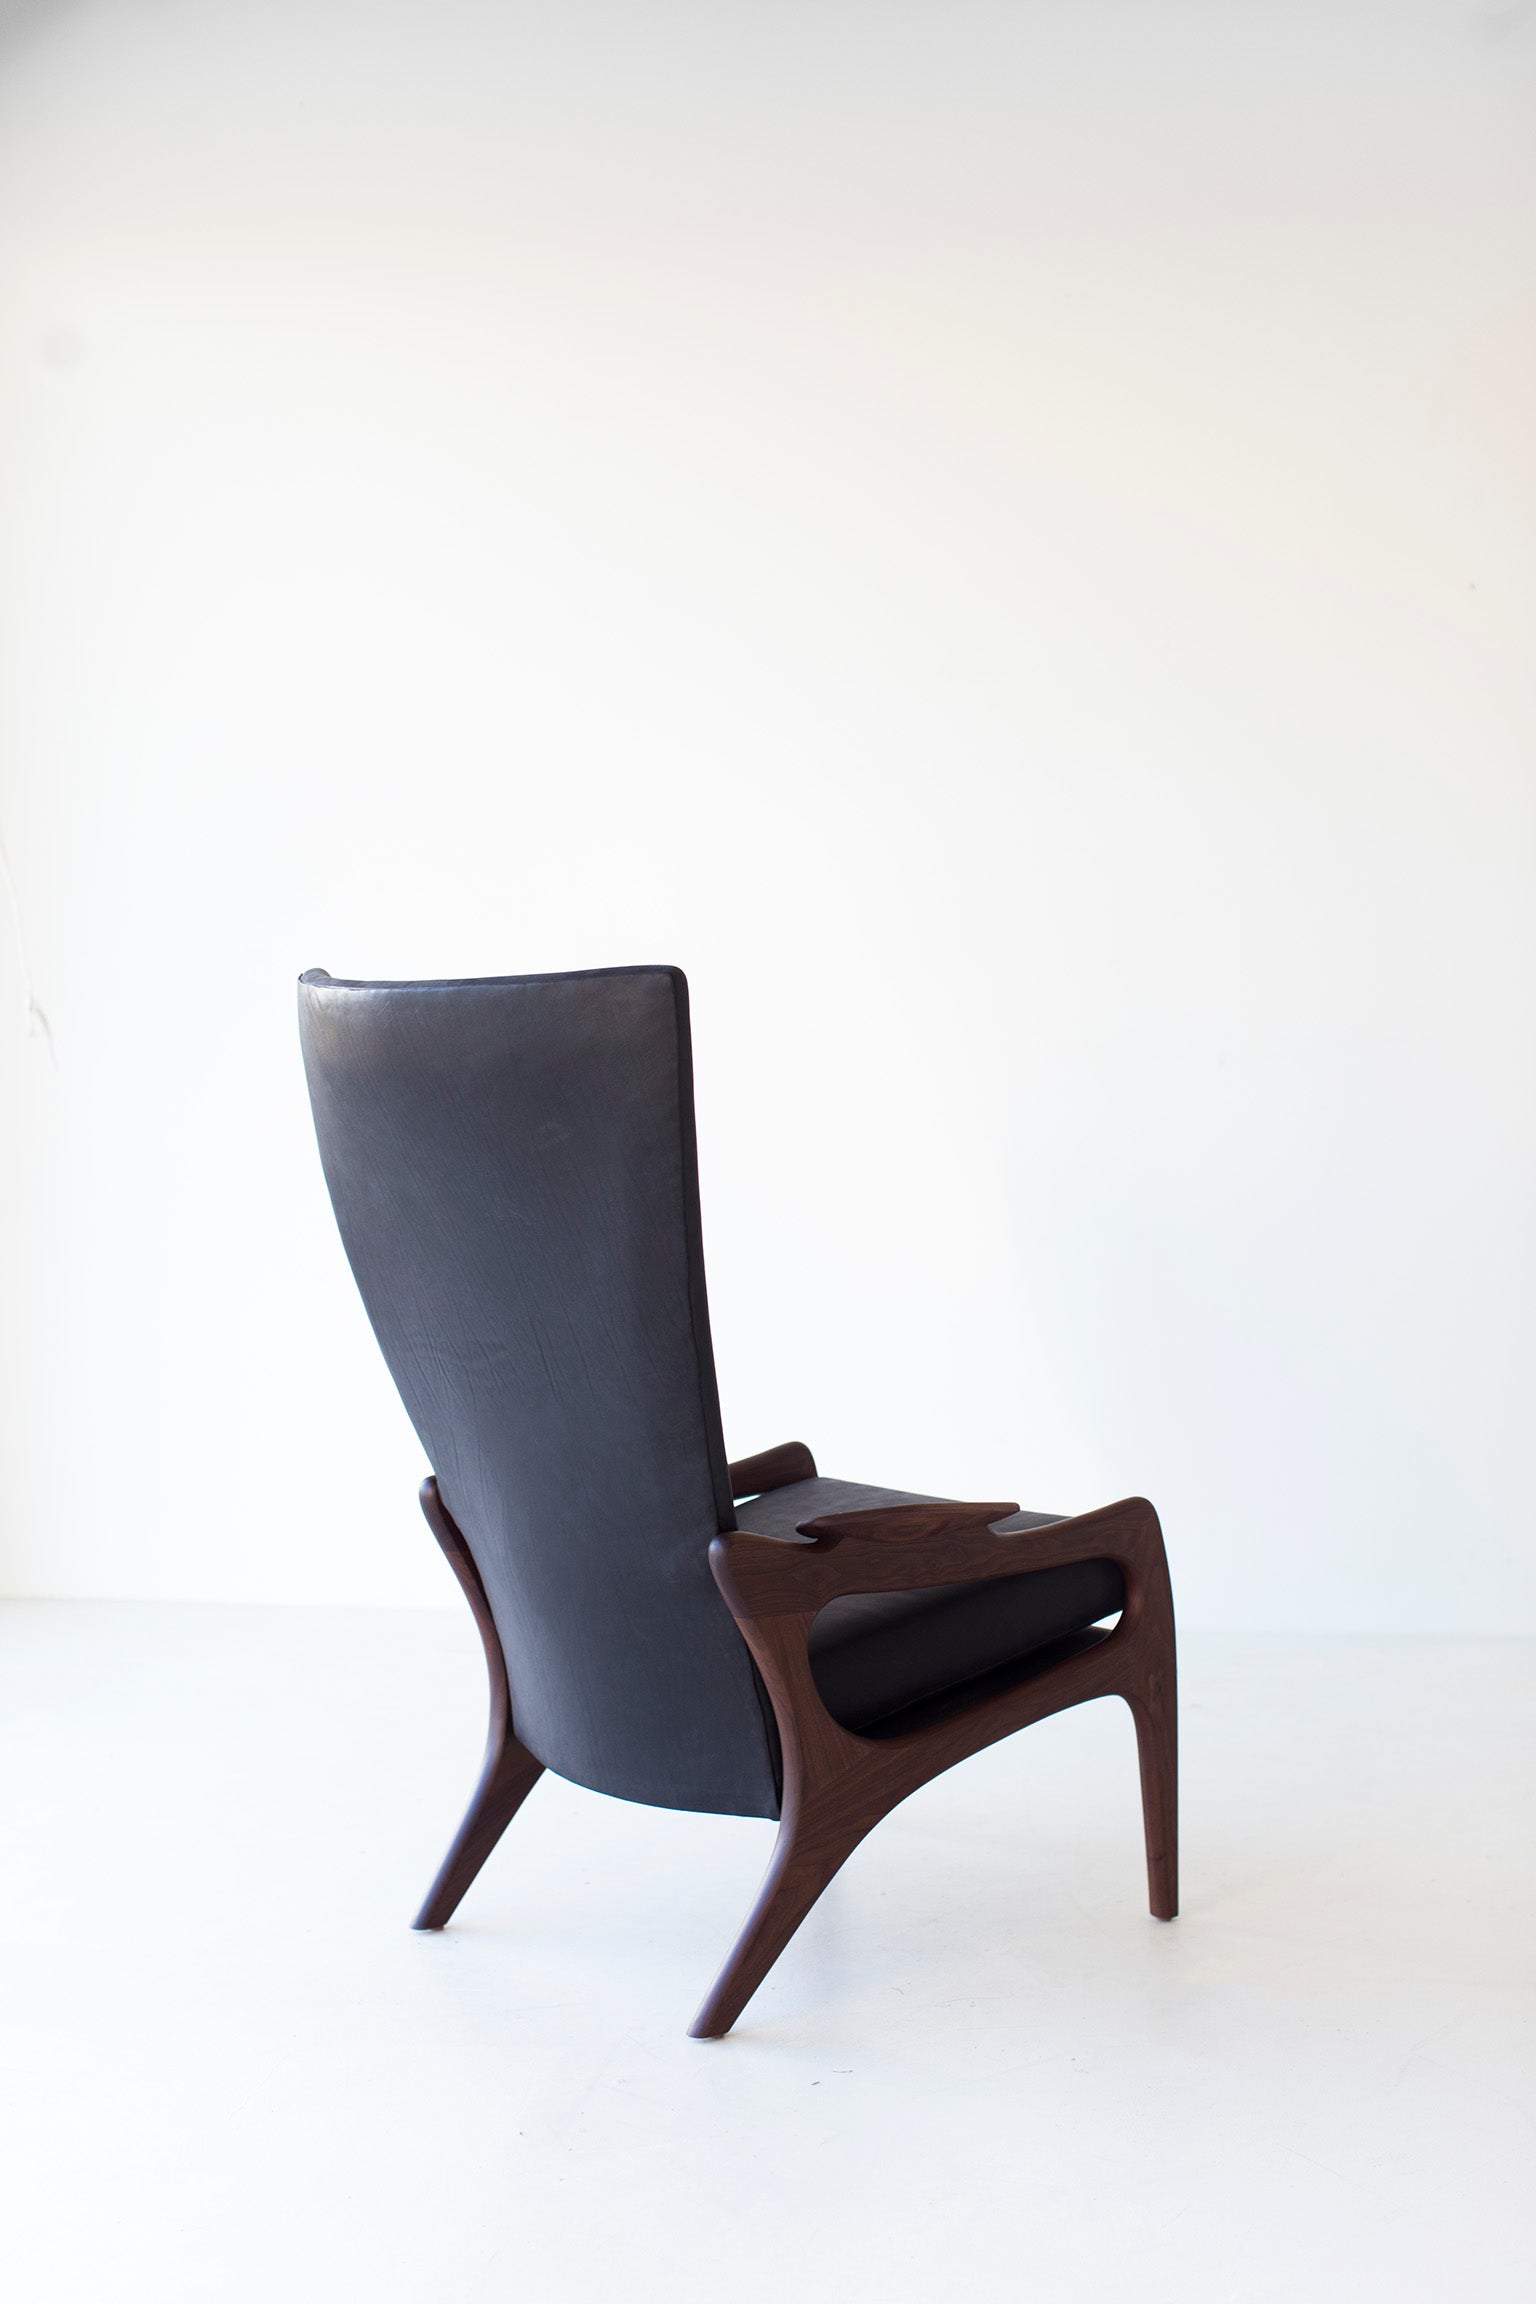 Hillsdale Modern Leather High Back Chair - 1604